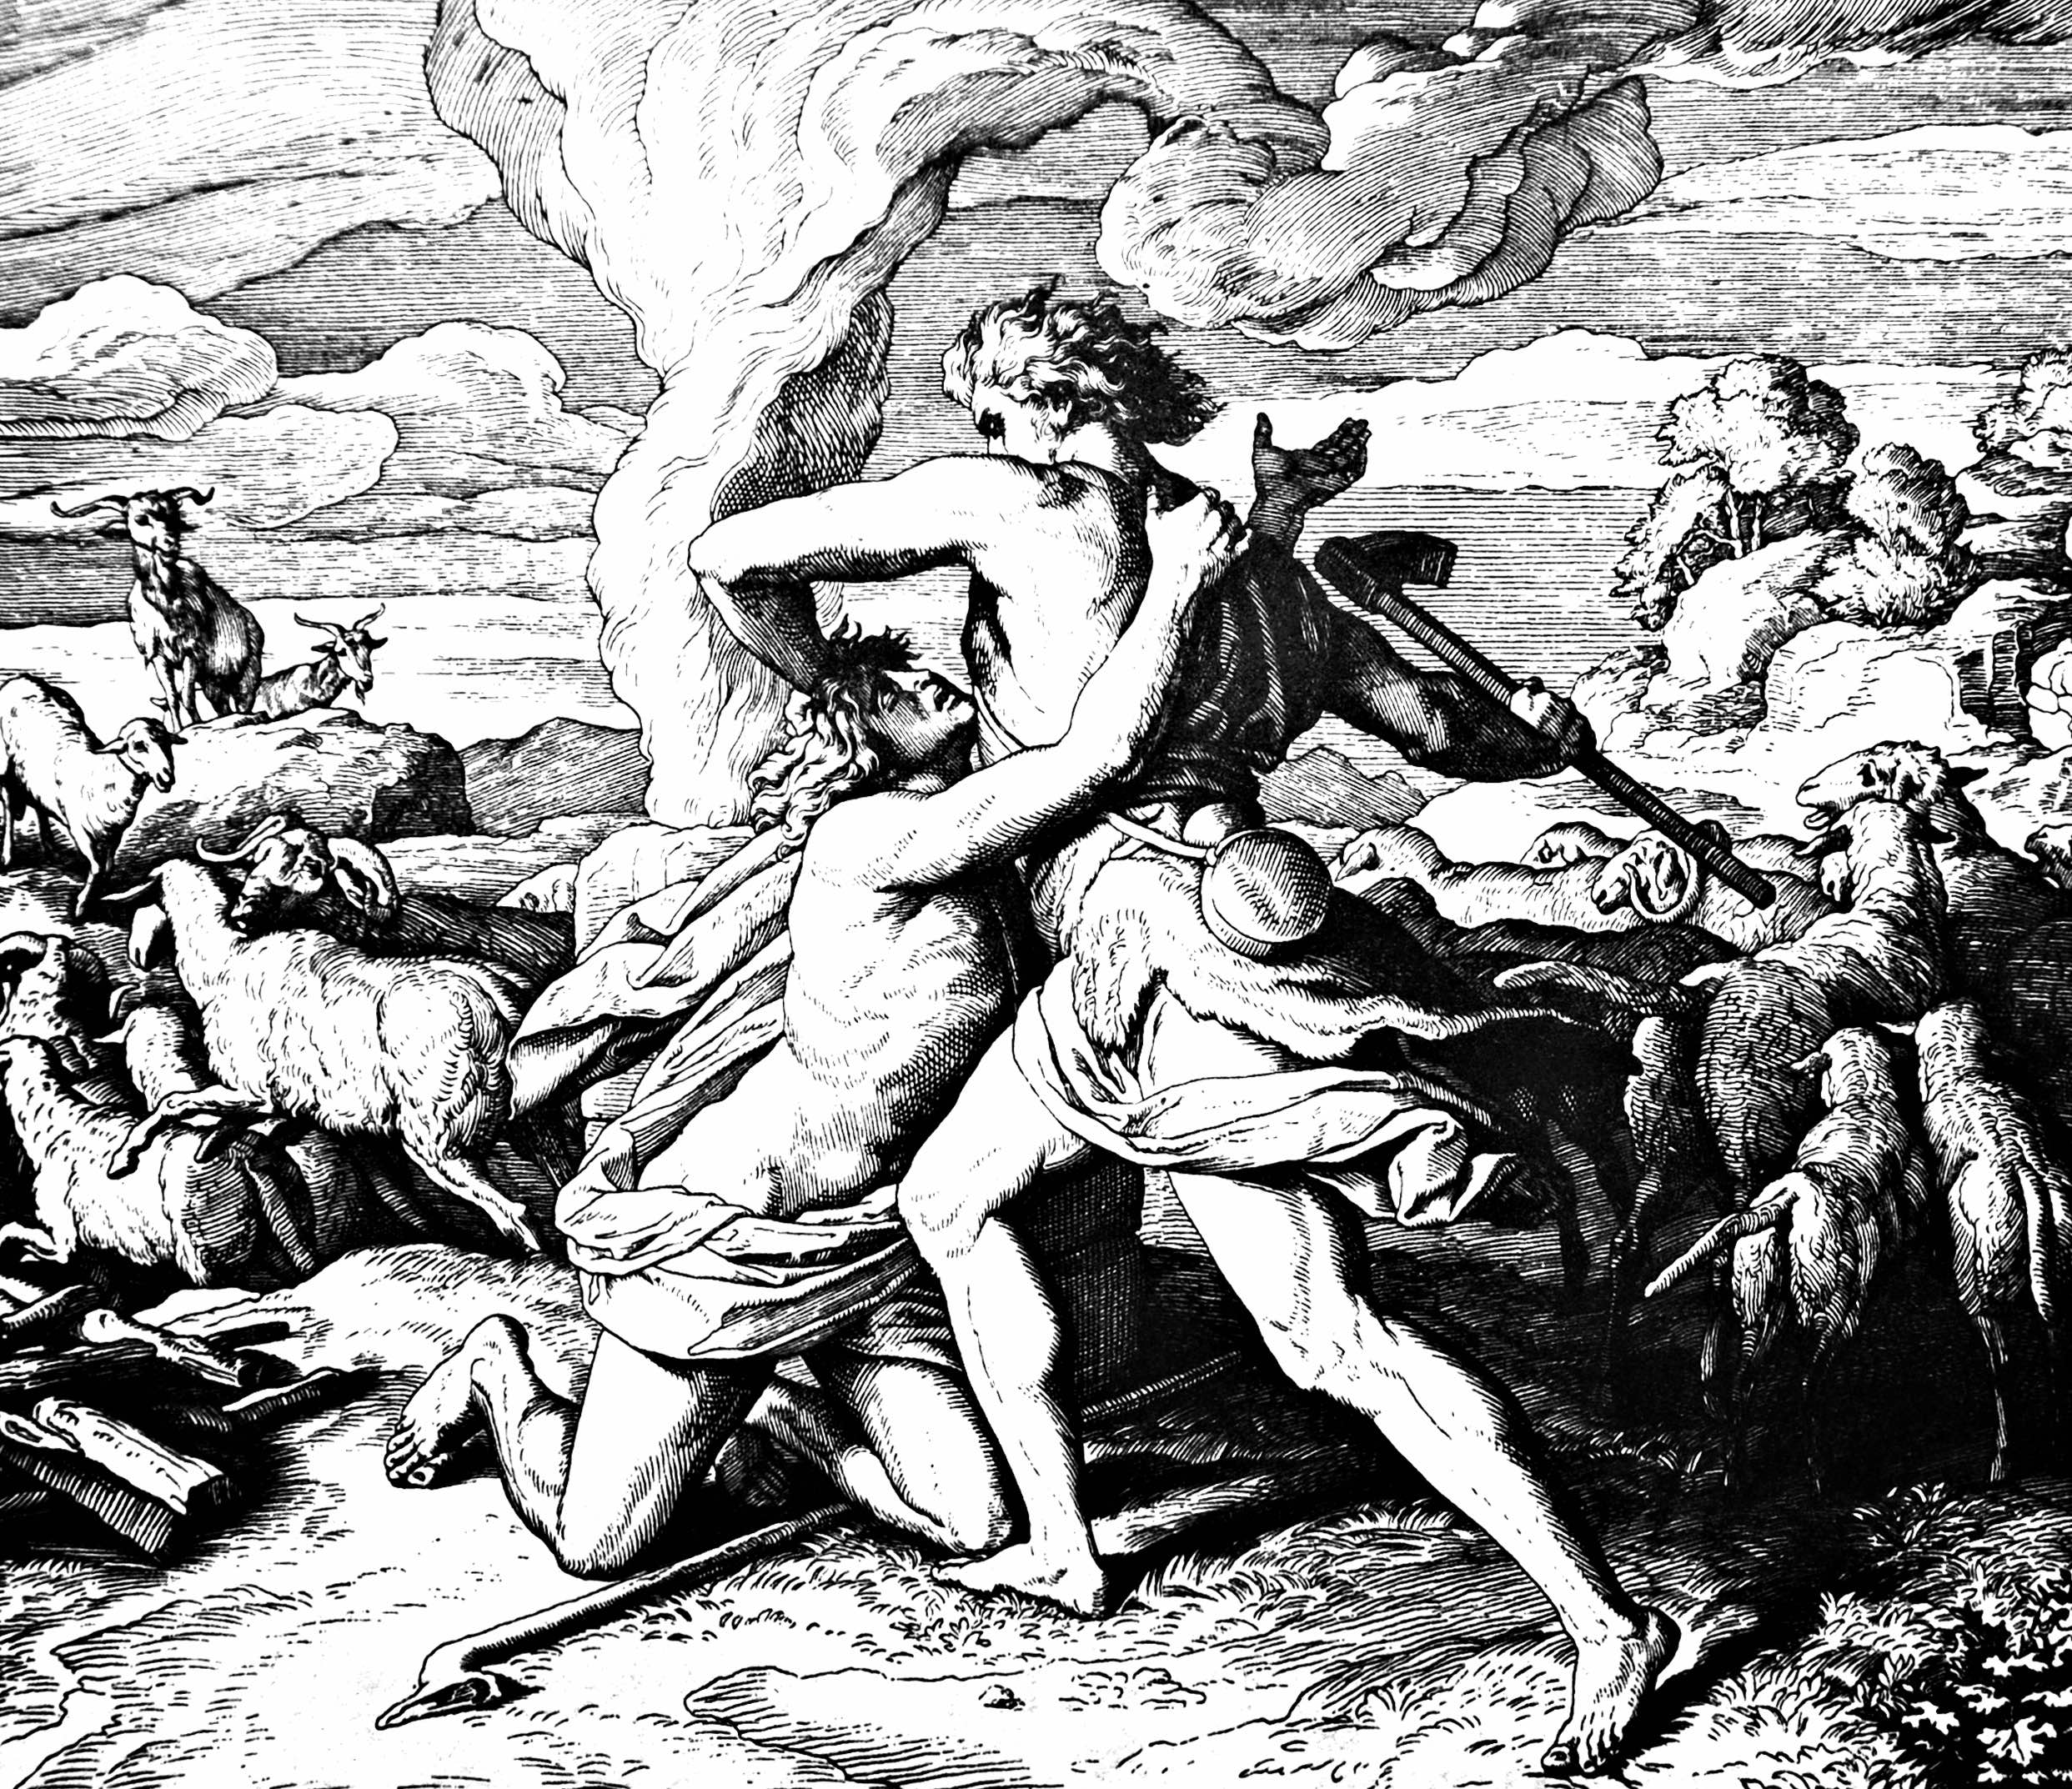 Cain killing his sibling Abel